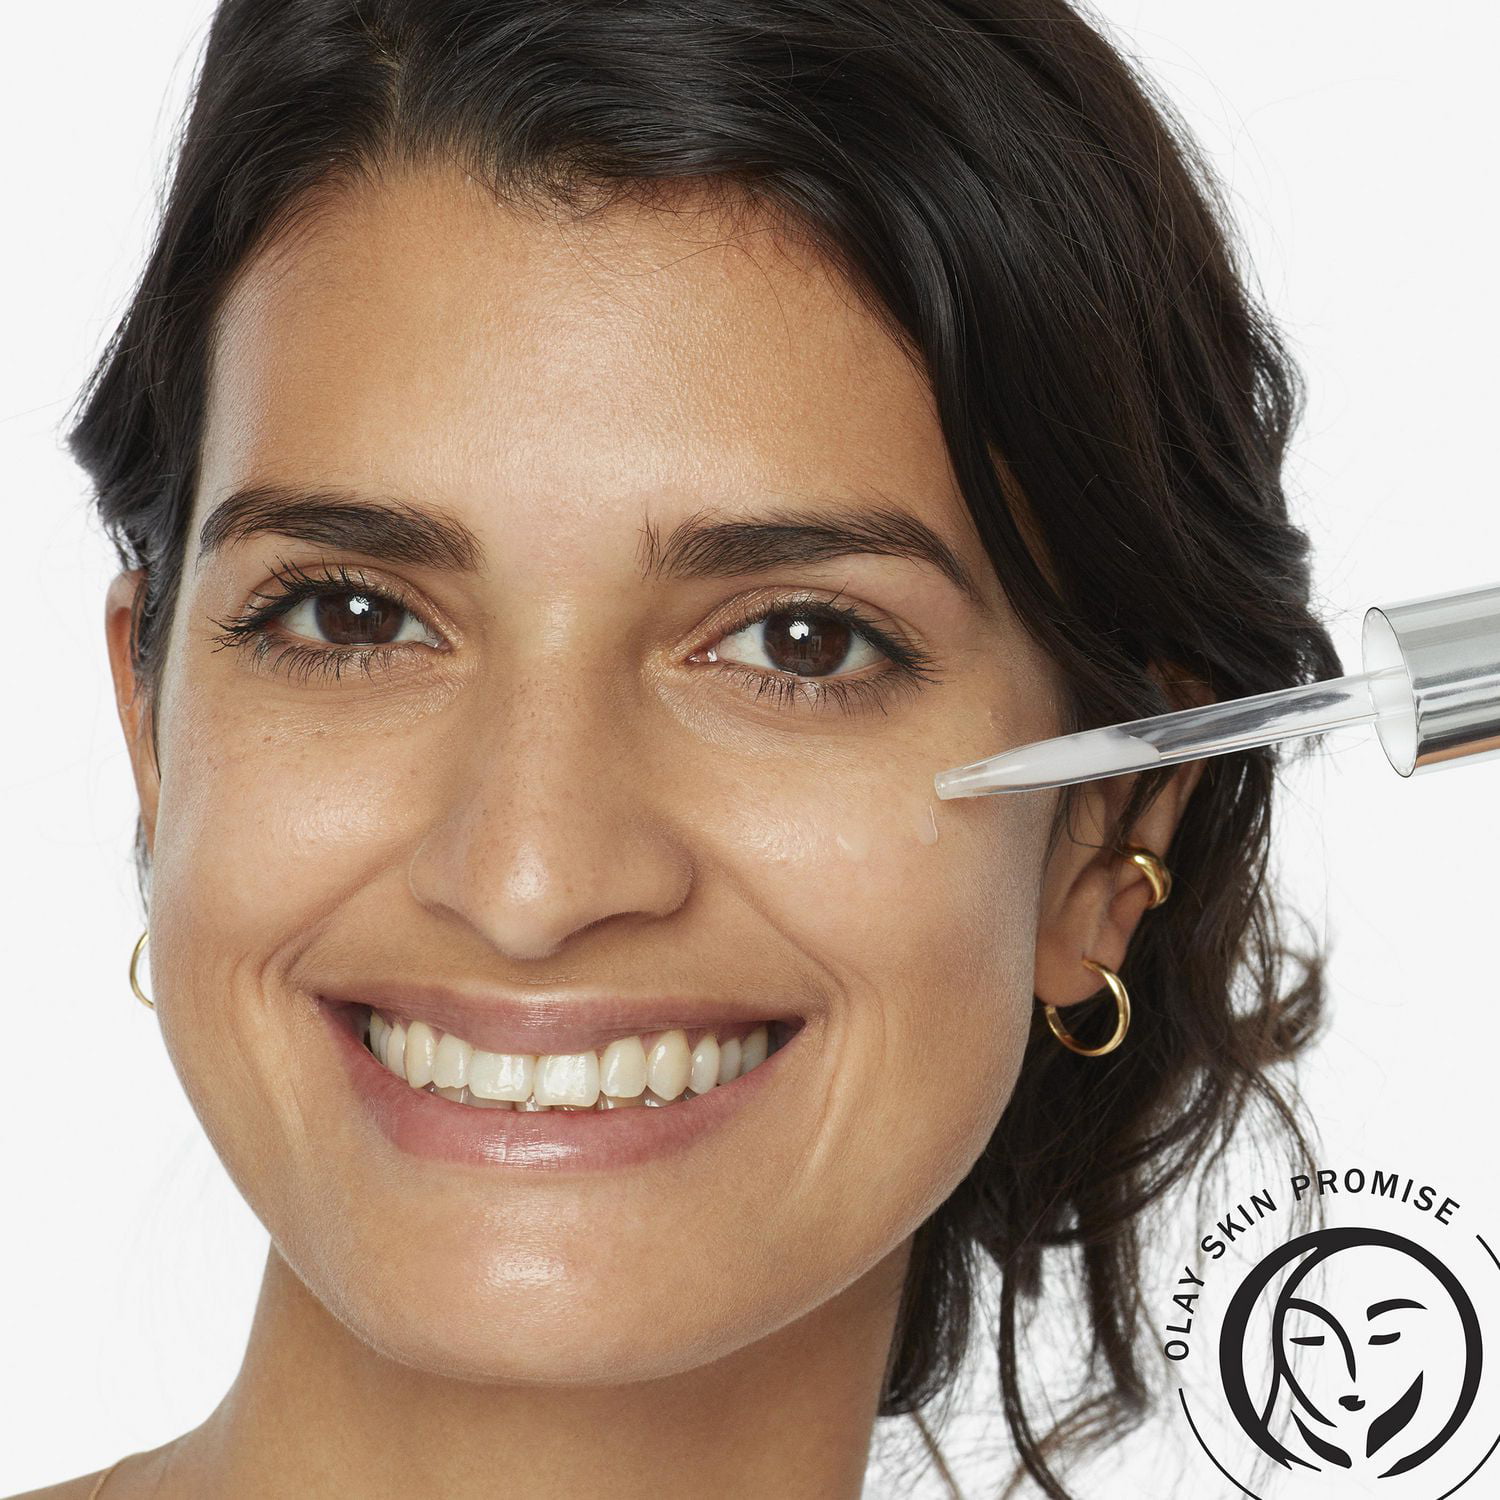 Neutrogena Rapid Firming Peptide Contour Lift Cream - Anti Aging Facial  Contour Cream for Firmer looking Skin, 50 g 